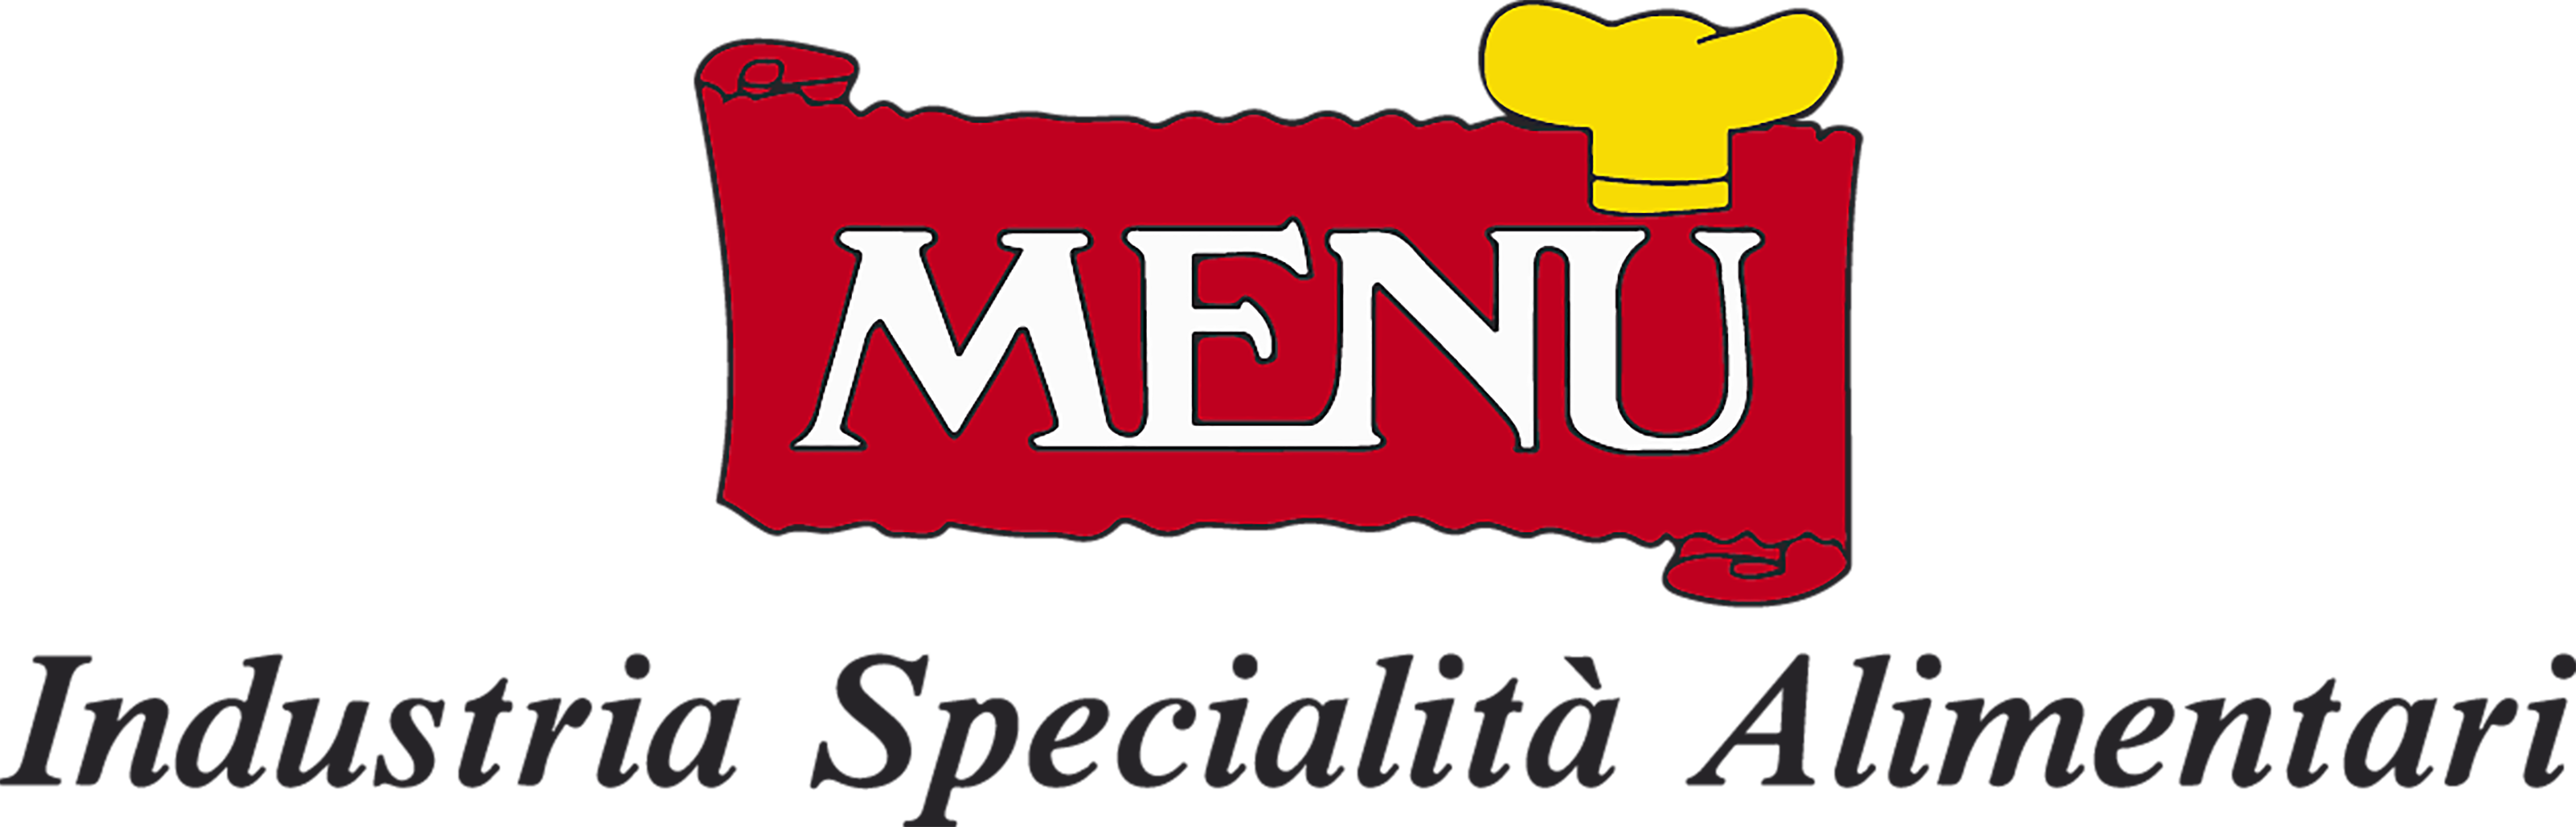 menu-logo